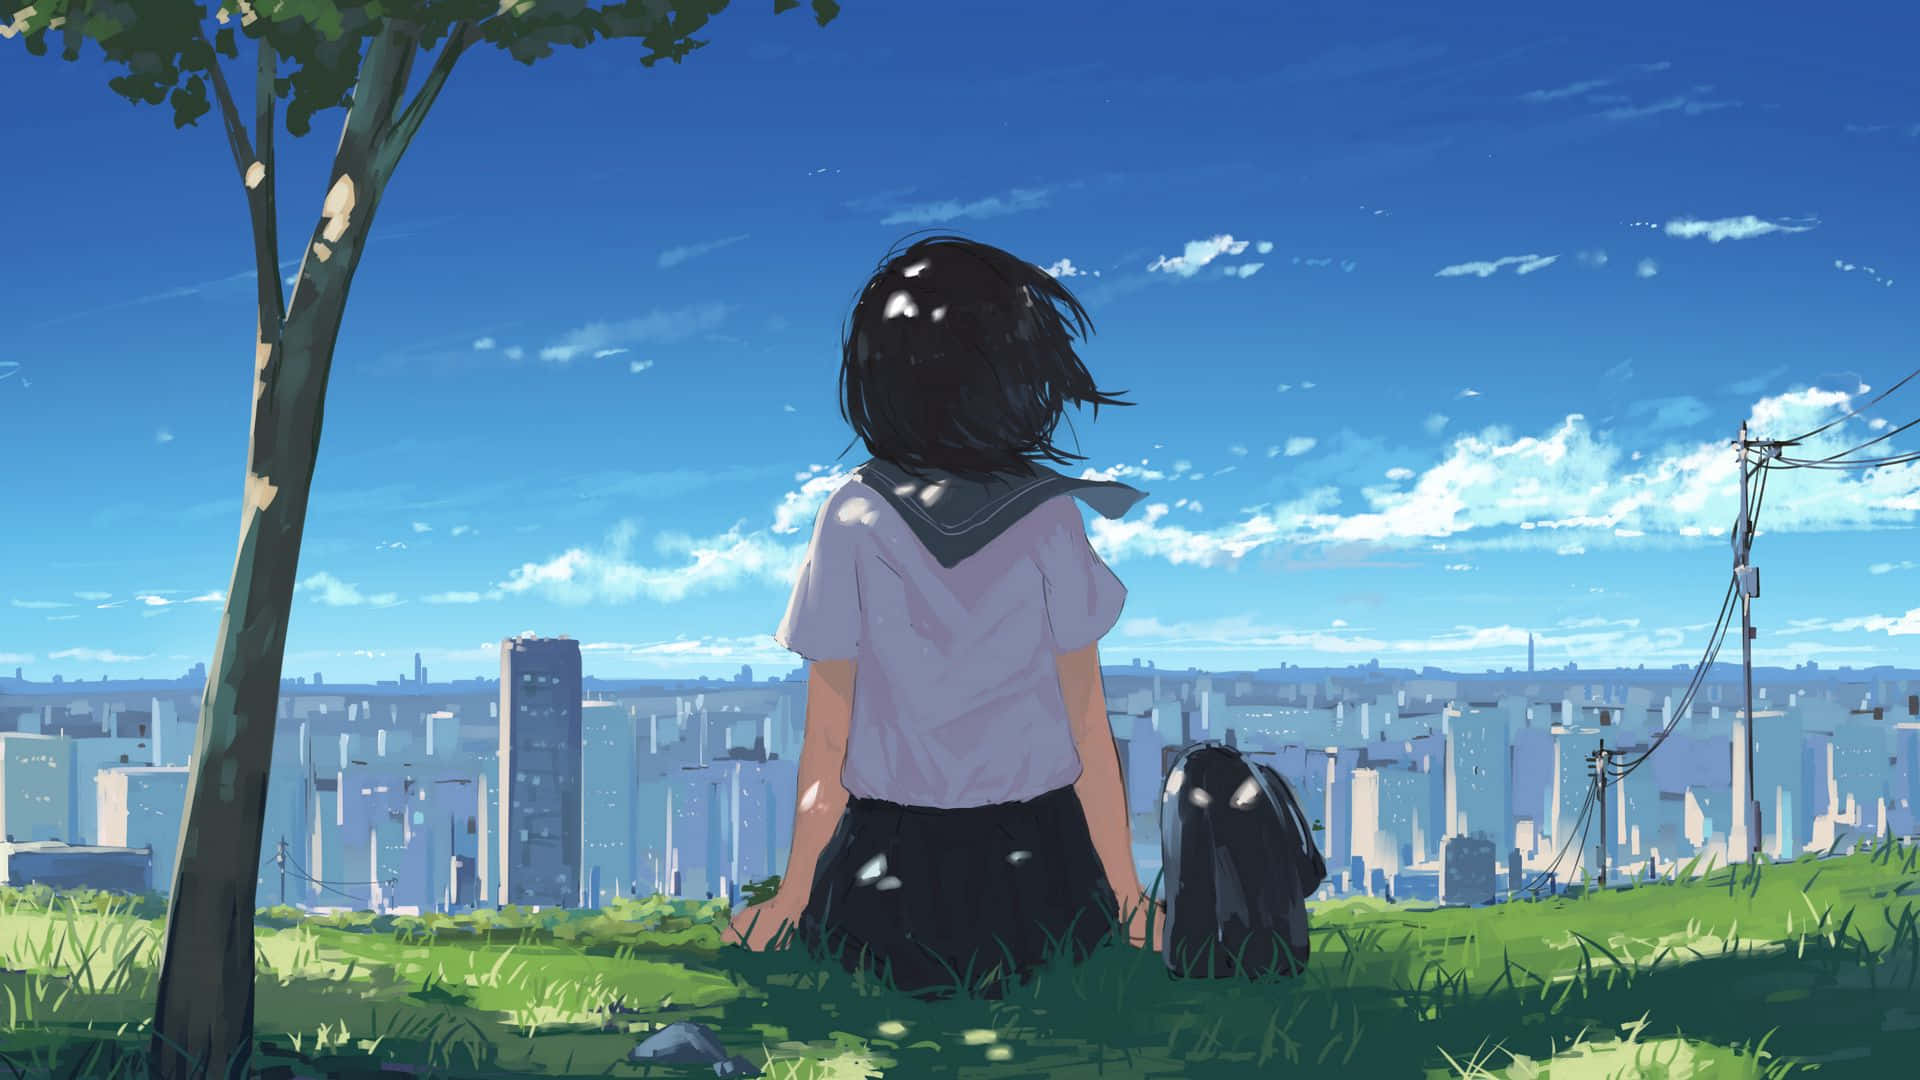 Anime Background